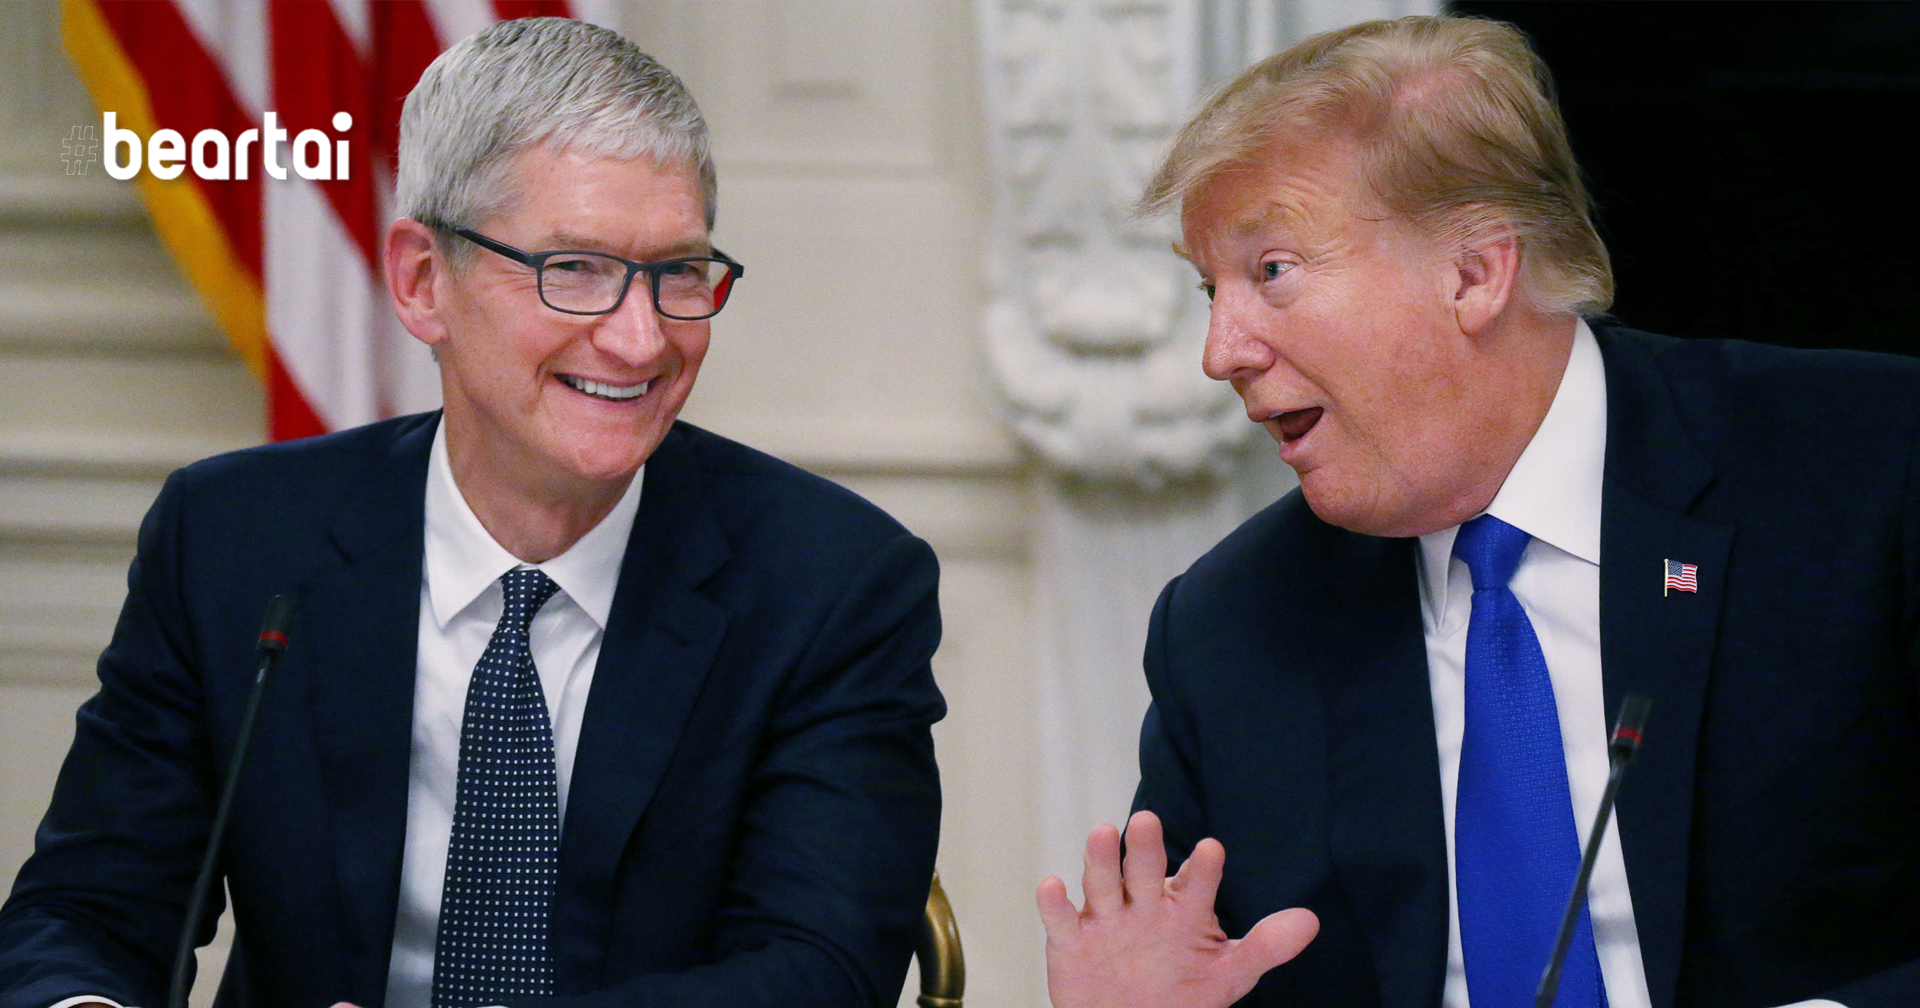 Tim Cook CEO ของ Apple บอกว่า Donald Trump ต้องรับผิดชอบต่อเหตุการณ์จลาจลบุกรัฐสภา